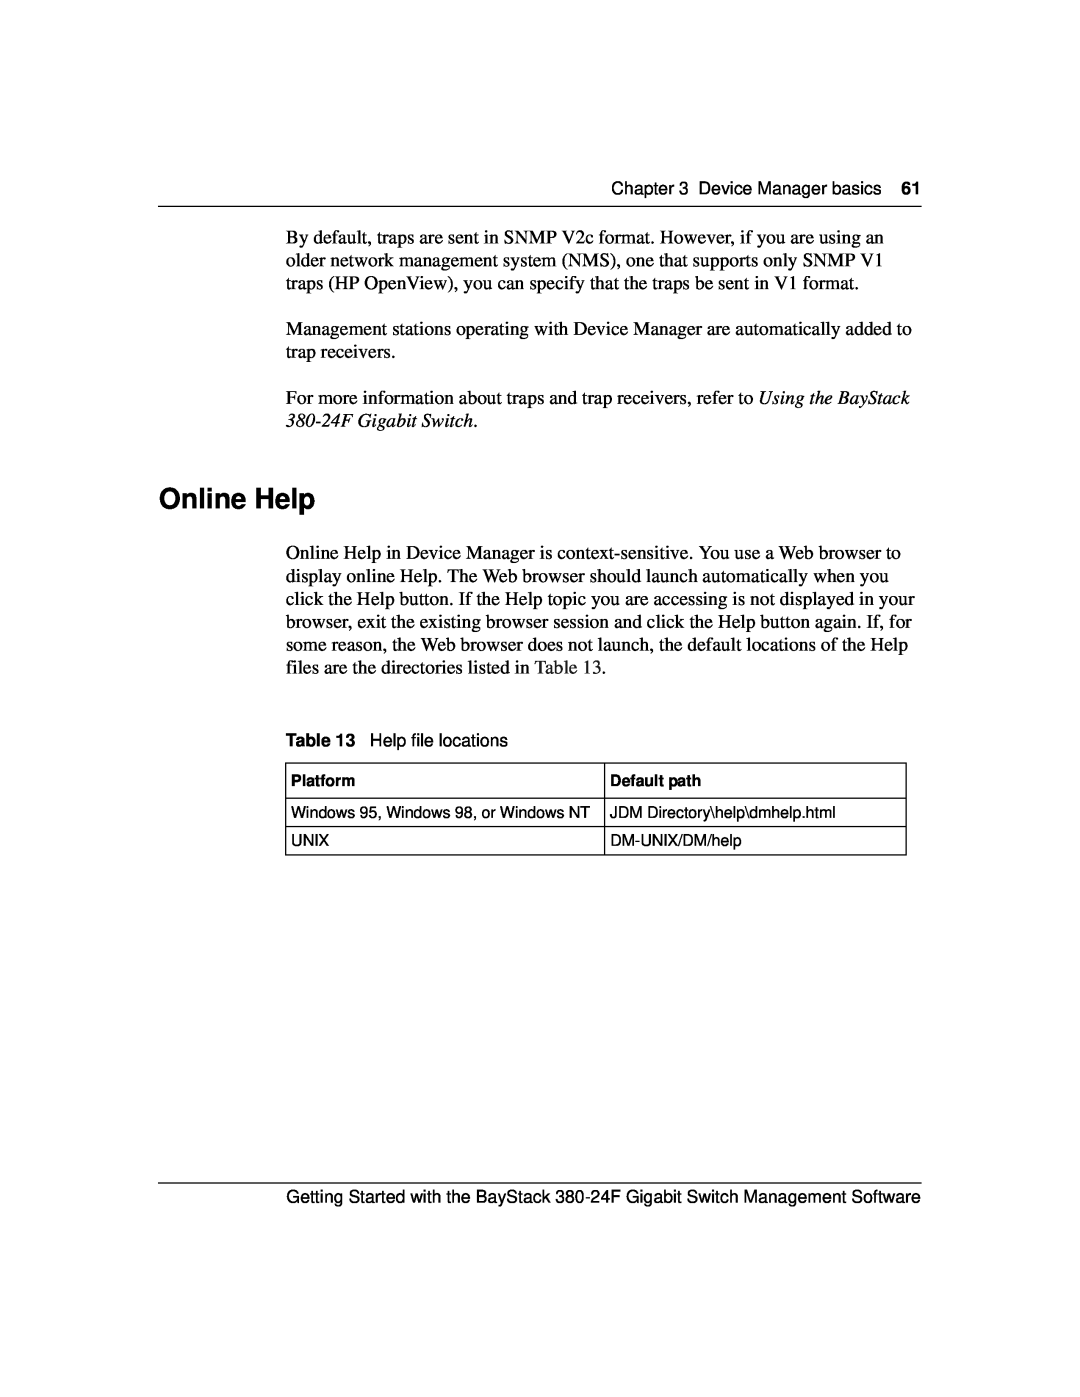 Nortel Networks 380-24F manual Online Help, Platform, Default path 